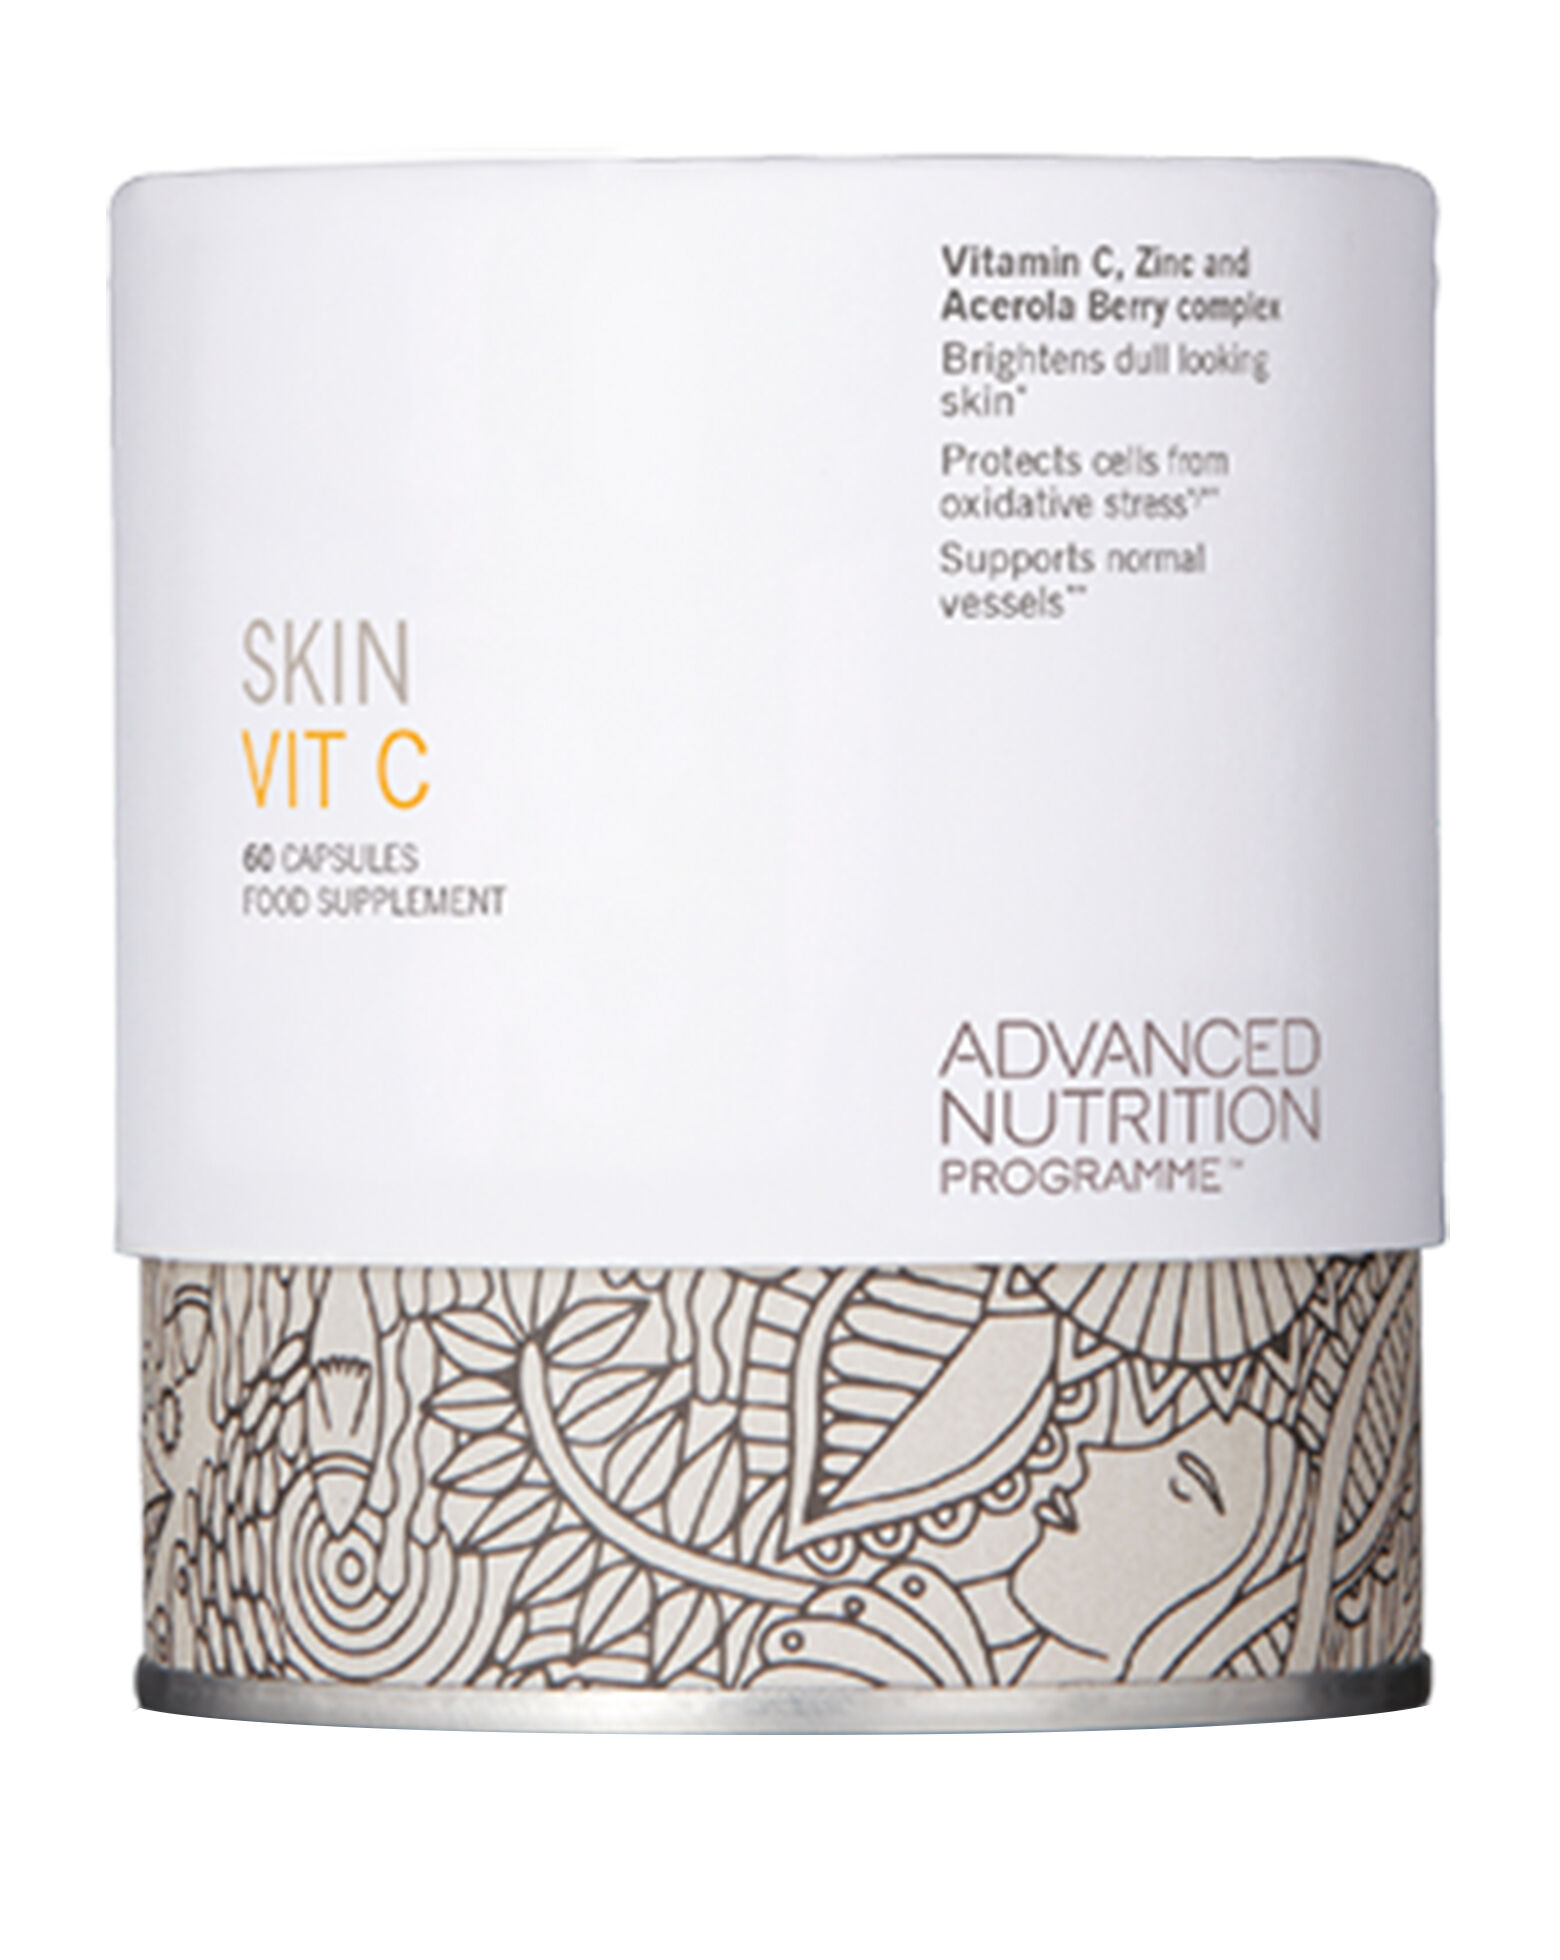 Advanced Nutrition Programme - Skin Vit C